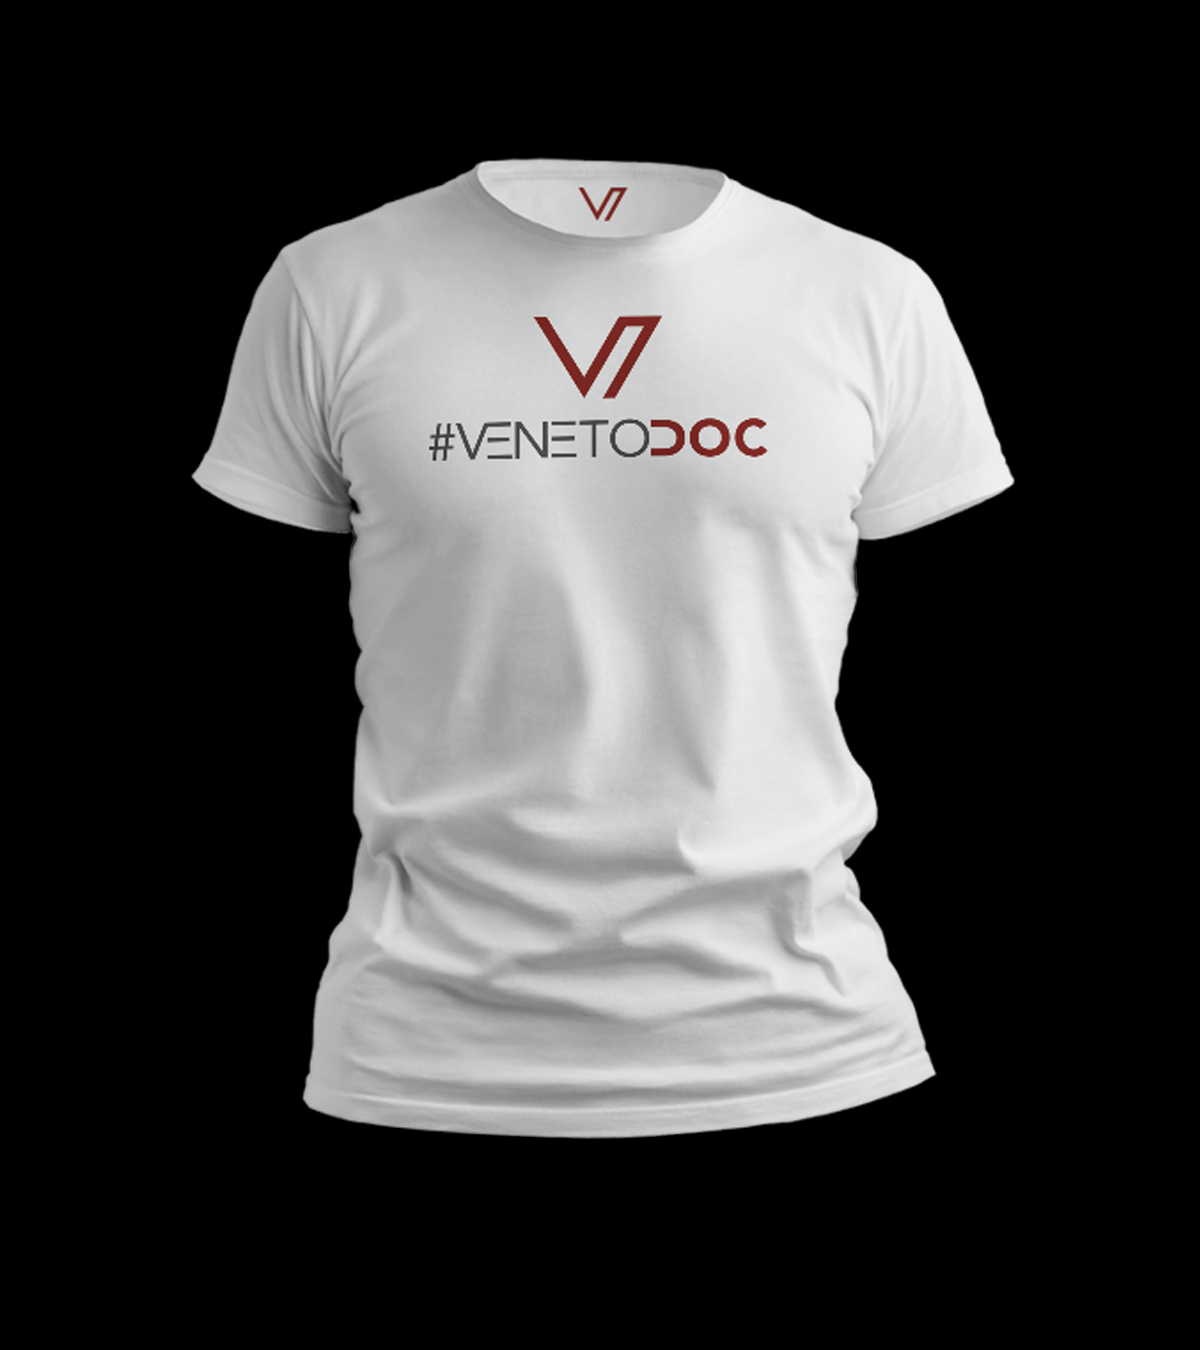 banner-t-shirt-leone-san-marco-veneto-doc